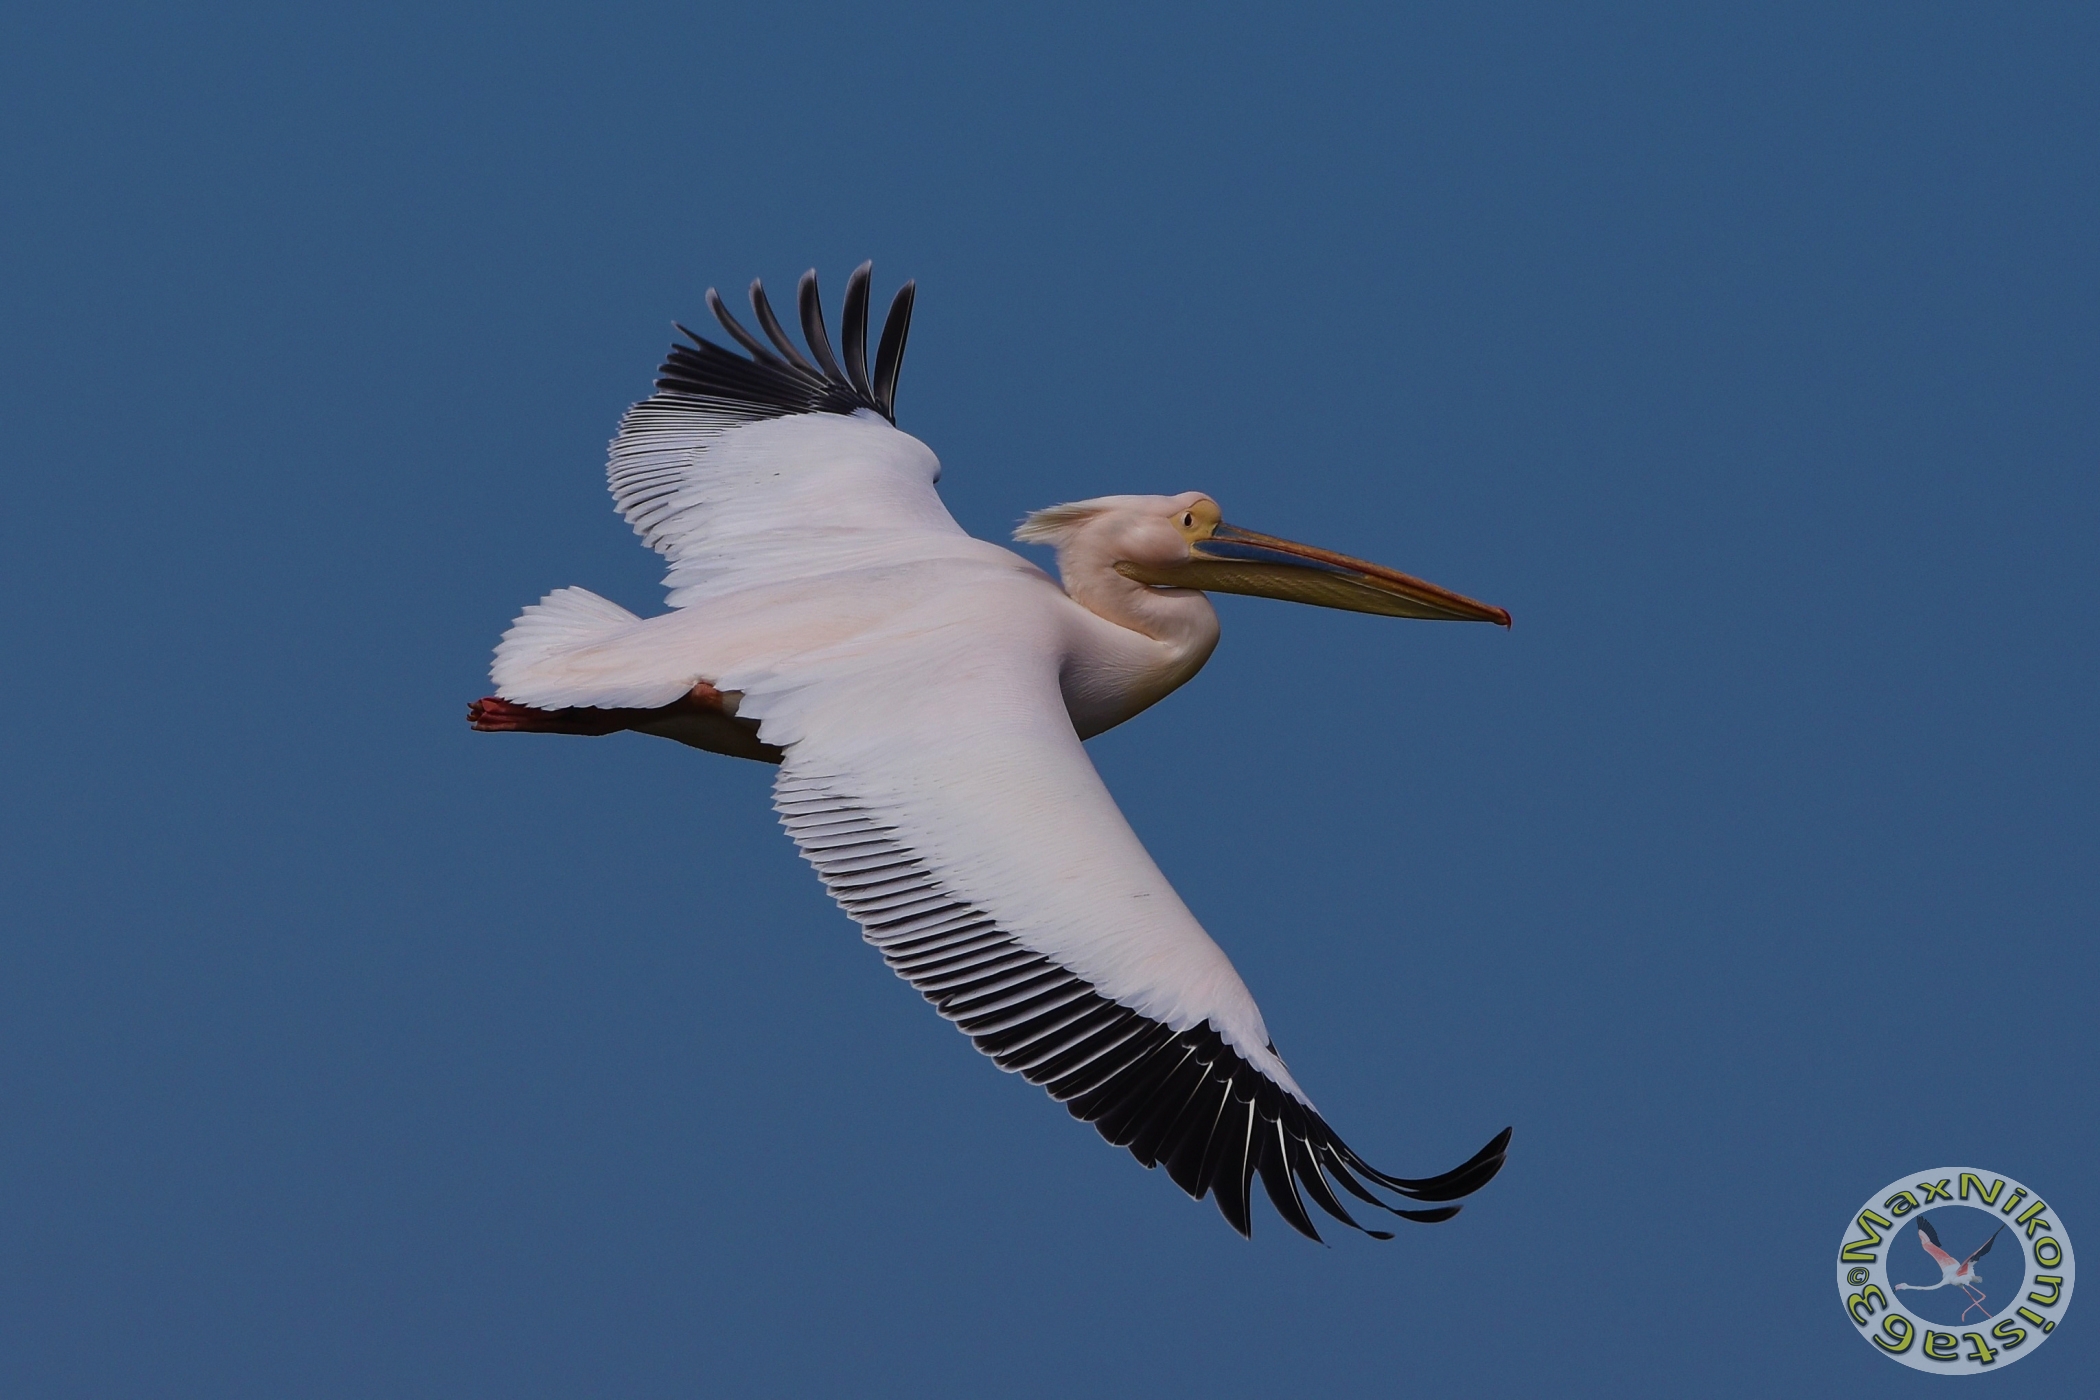 Pelican on the sky of Cagliari, second shot...